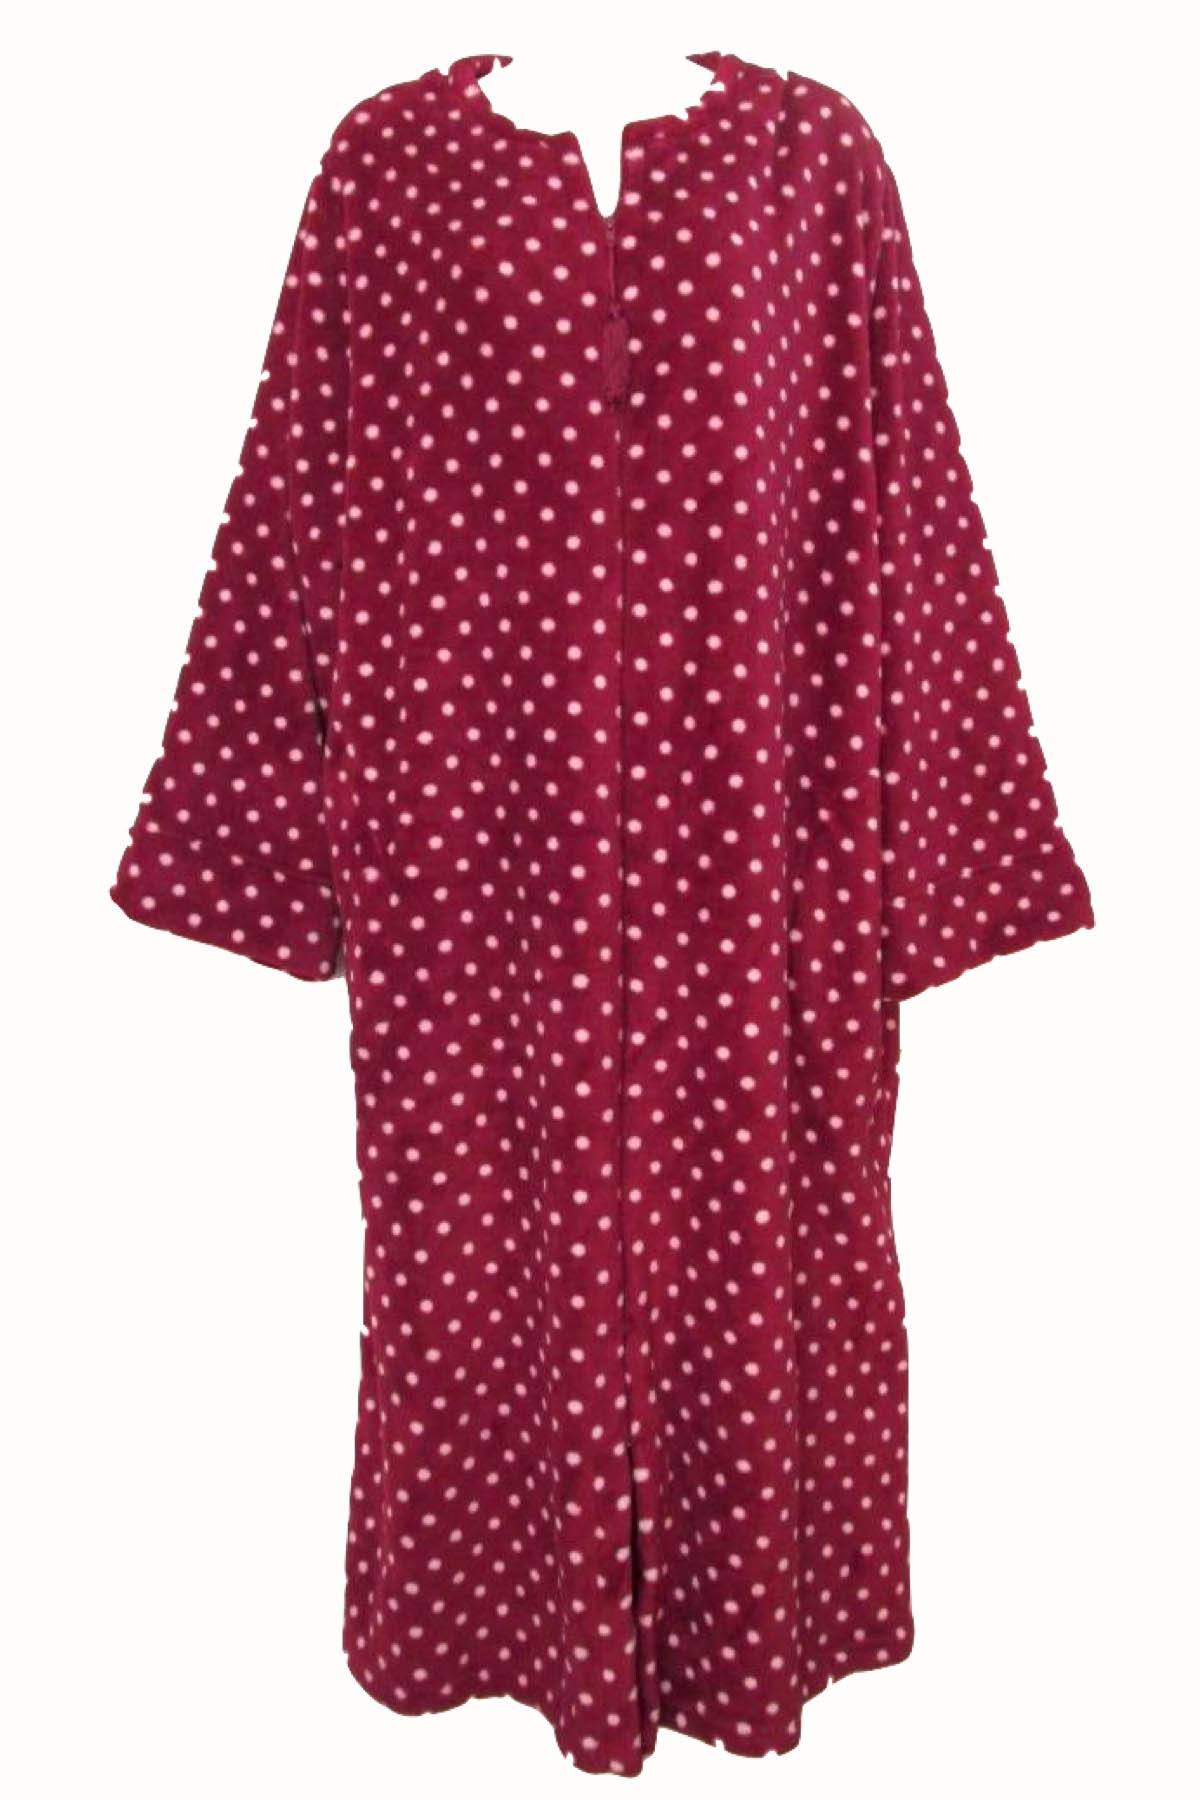 Miss Elaine Red/Pink Polka-Dot Long Fleece Zip-Up Robe